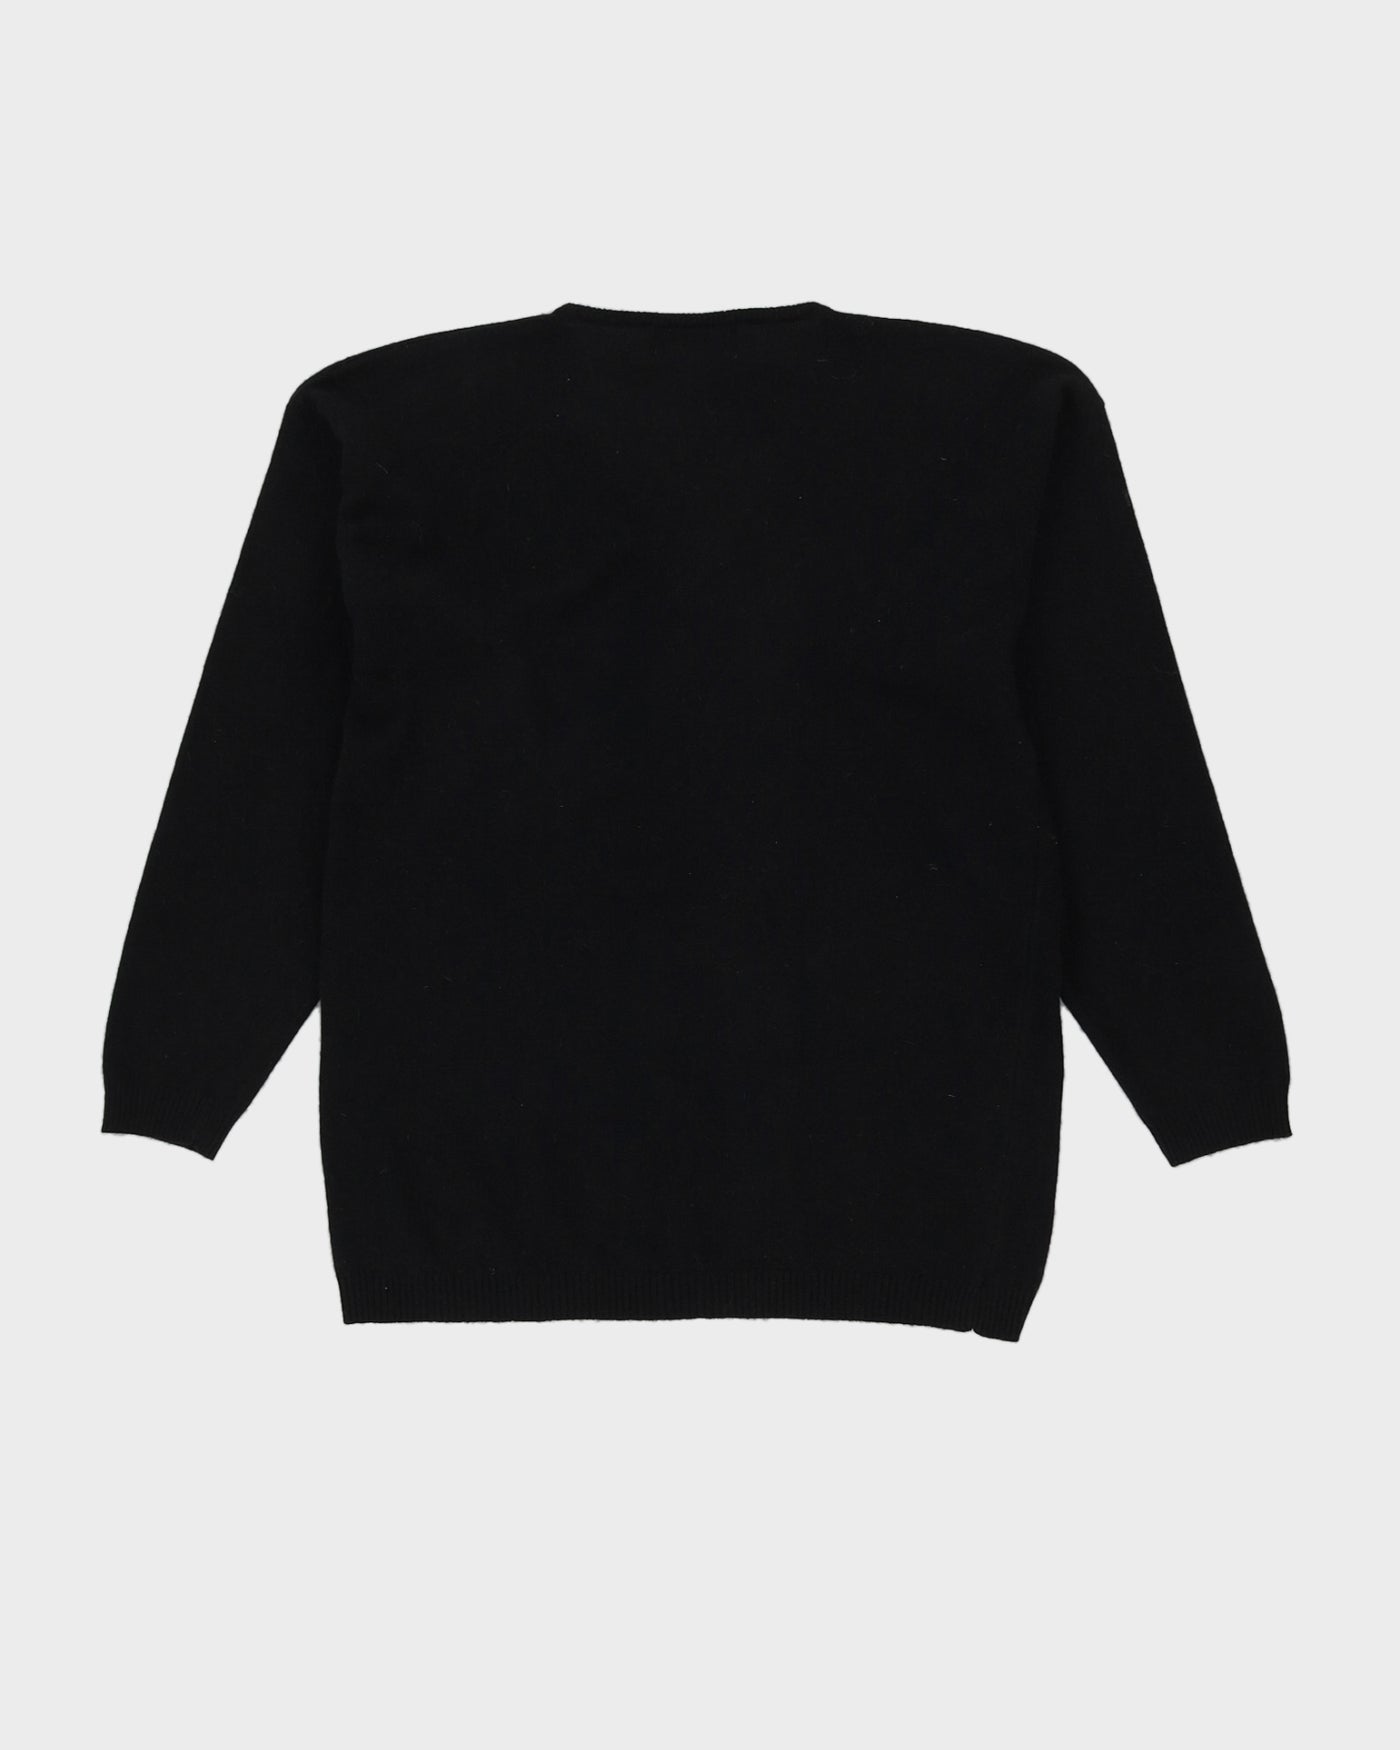 Black Sequin Detailed Knitted Jumper - S